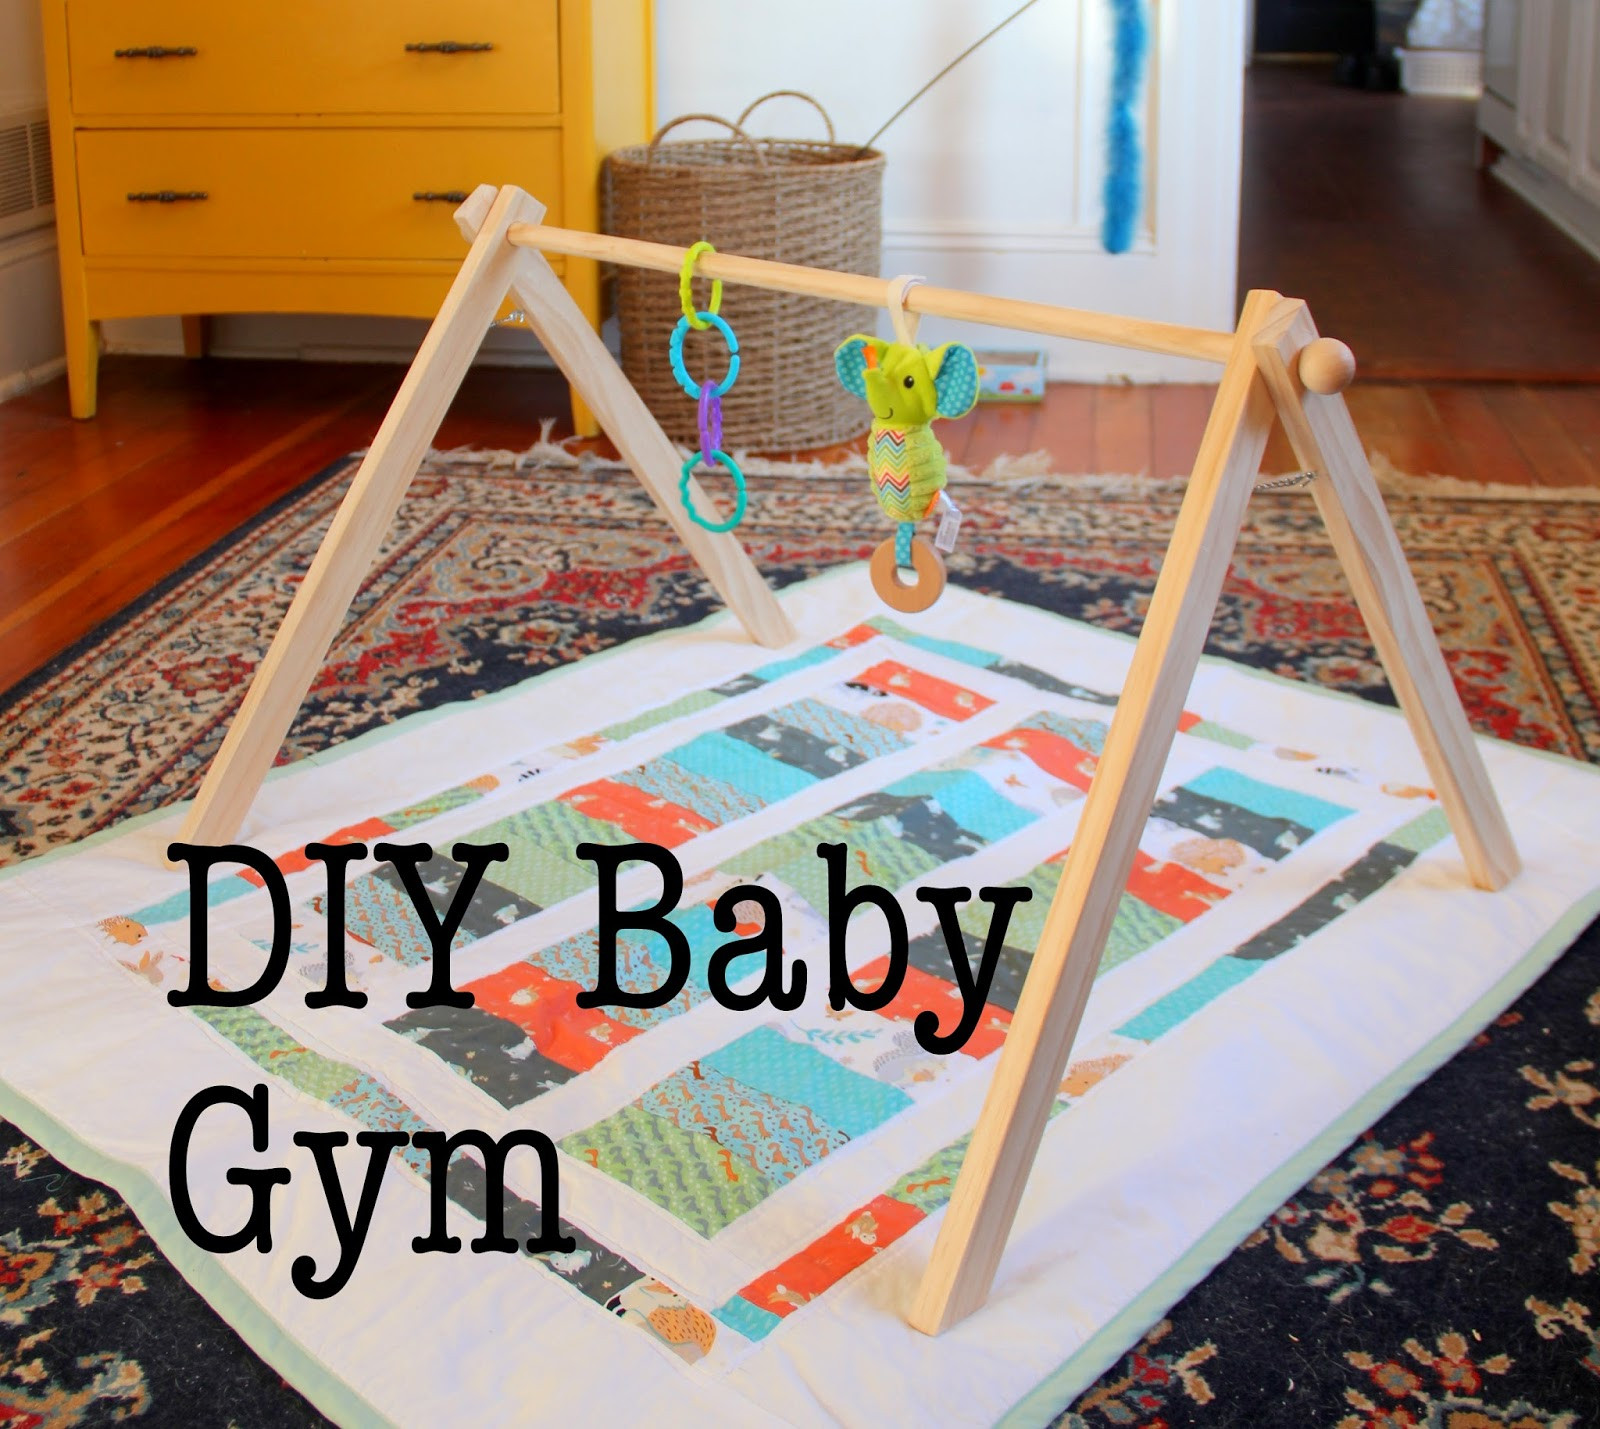 Diy Baby Gym
 EAK A House DIY Baby Gym